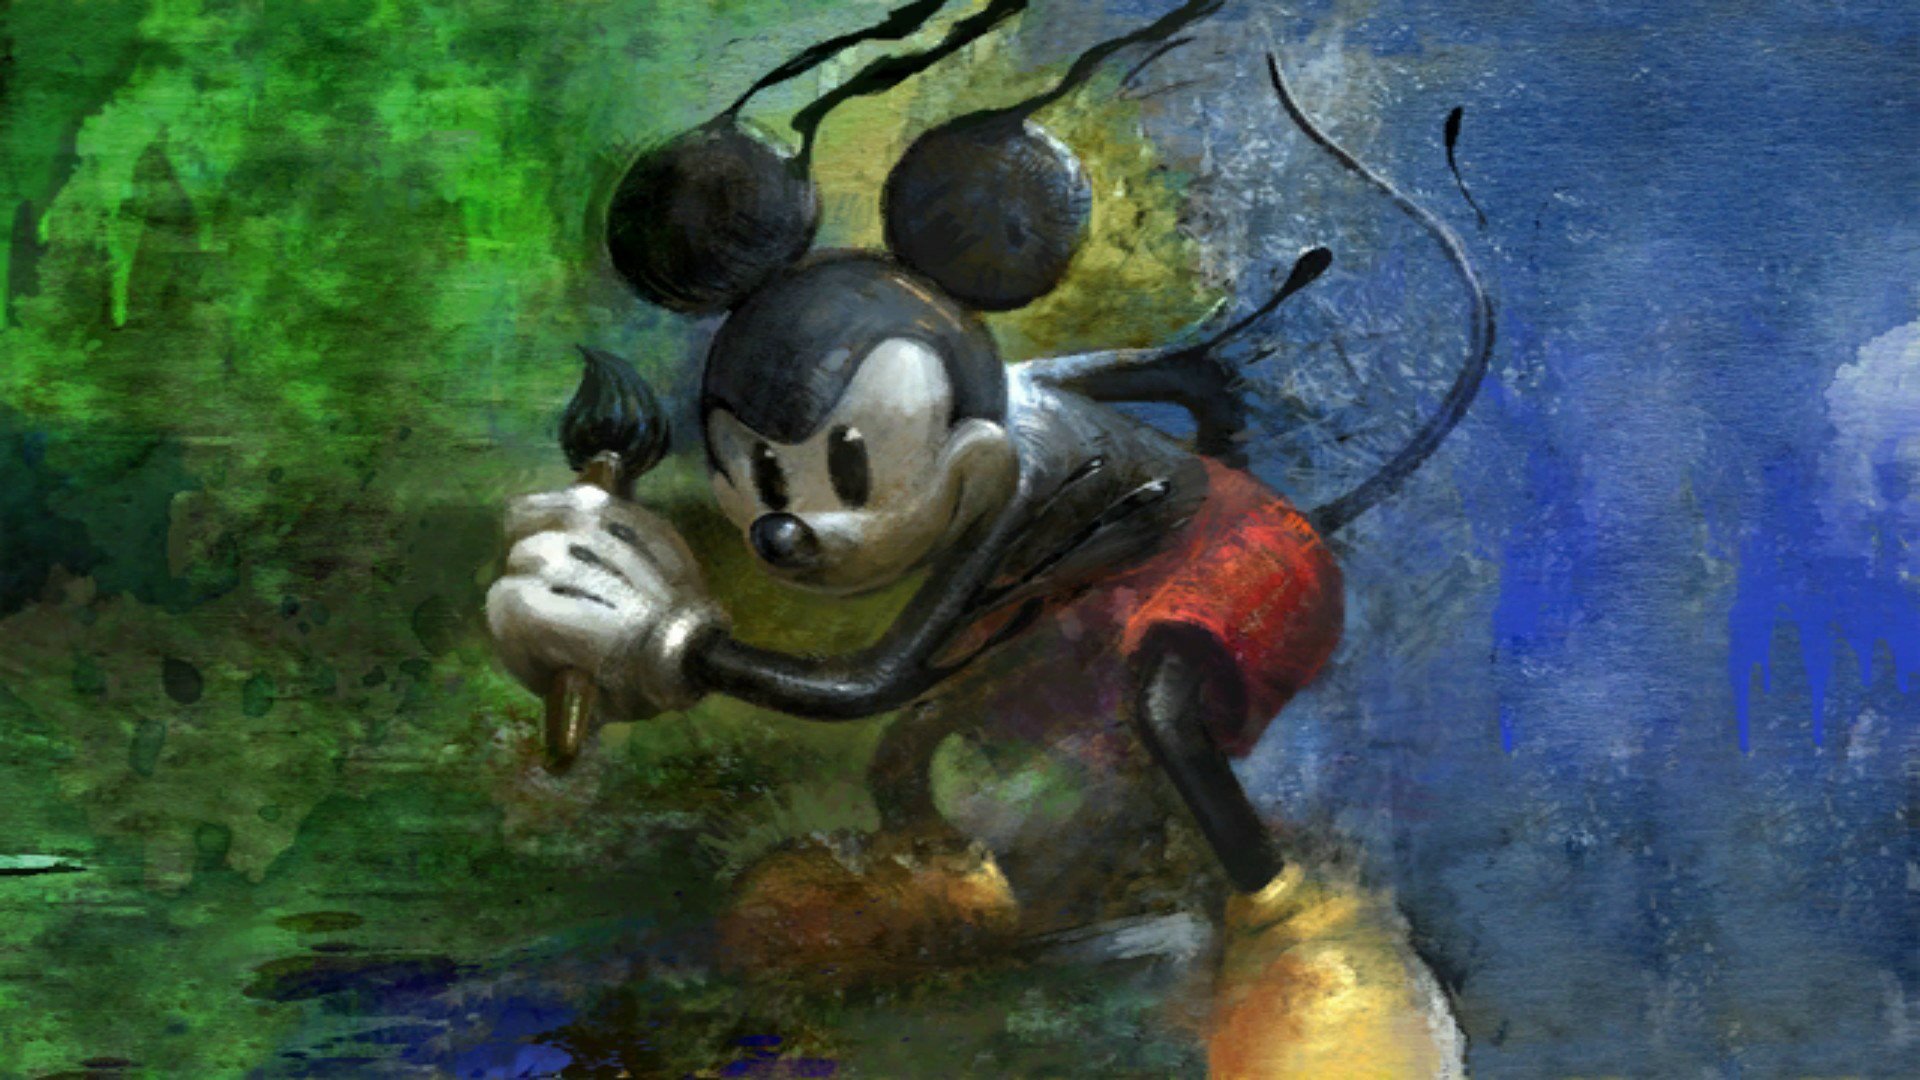 epic, Mickey, Disney, Platform, Family, Adventure, Puzzle, 1epicm, Animation Wallpaper